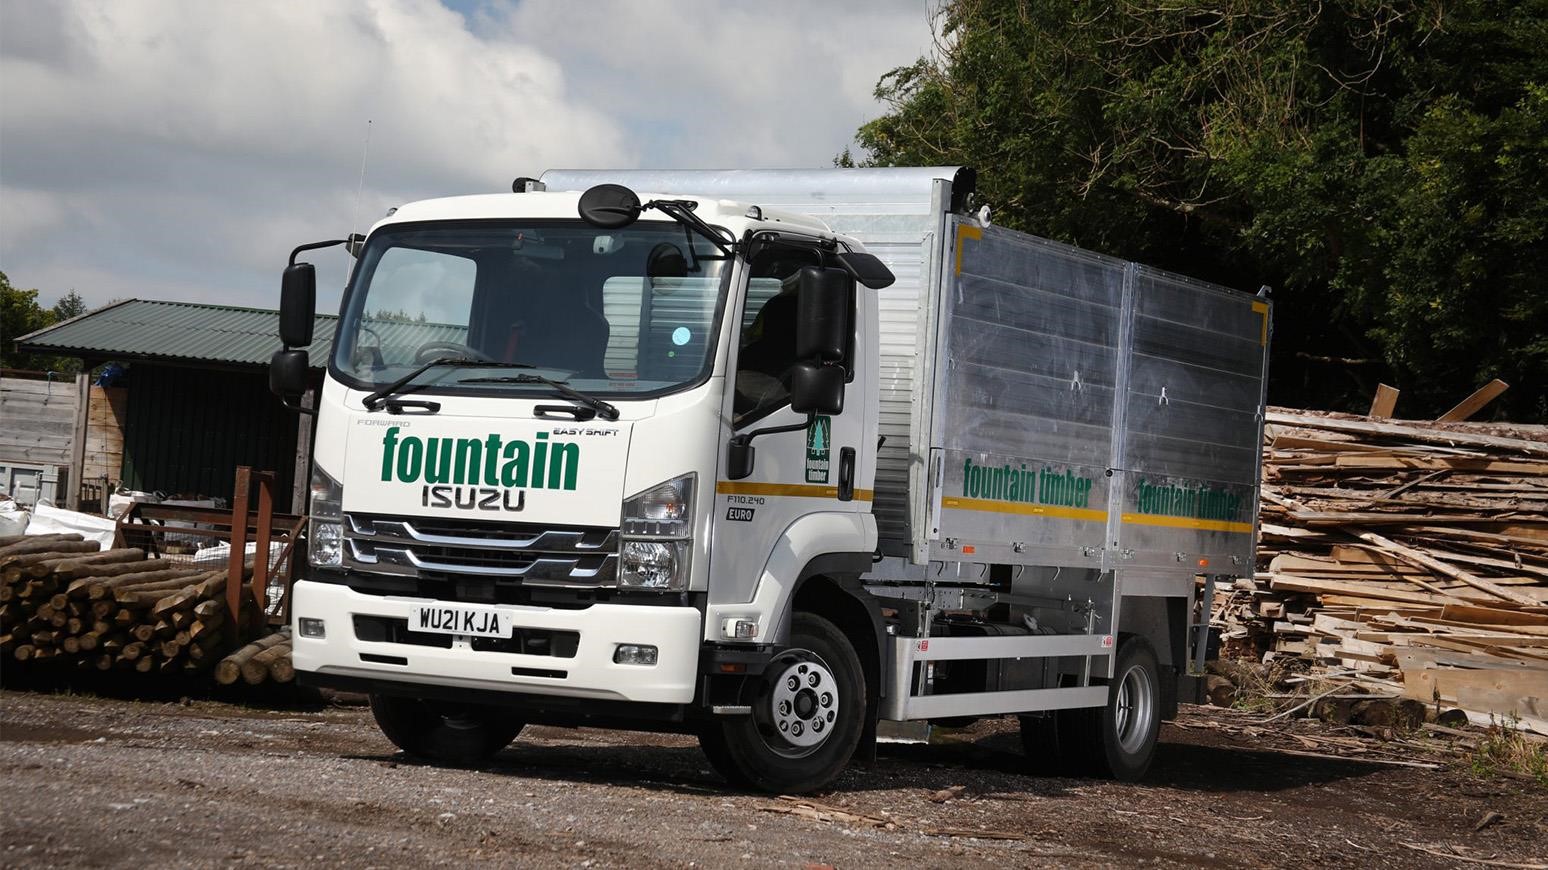 Timber Merchant Adds Two 11-Tonne Isuzu Trucks To Distribution Fleet, Increasing Payload & Flexibility